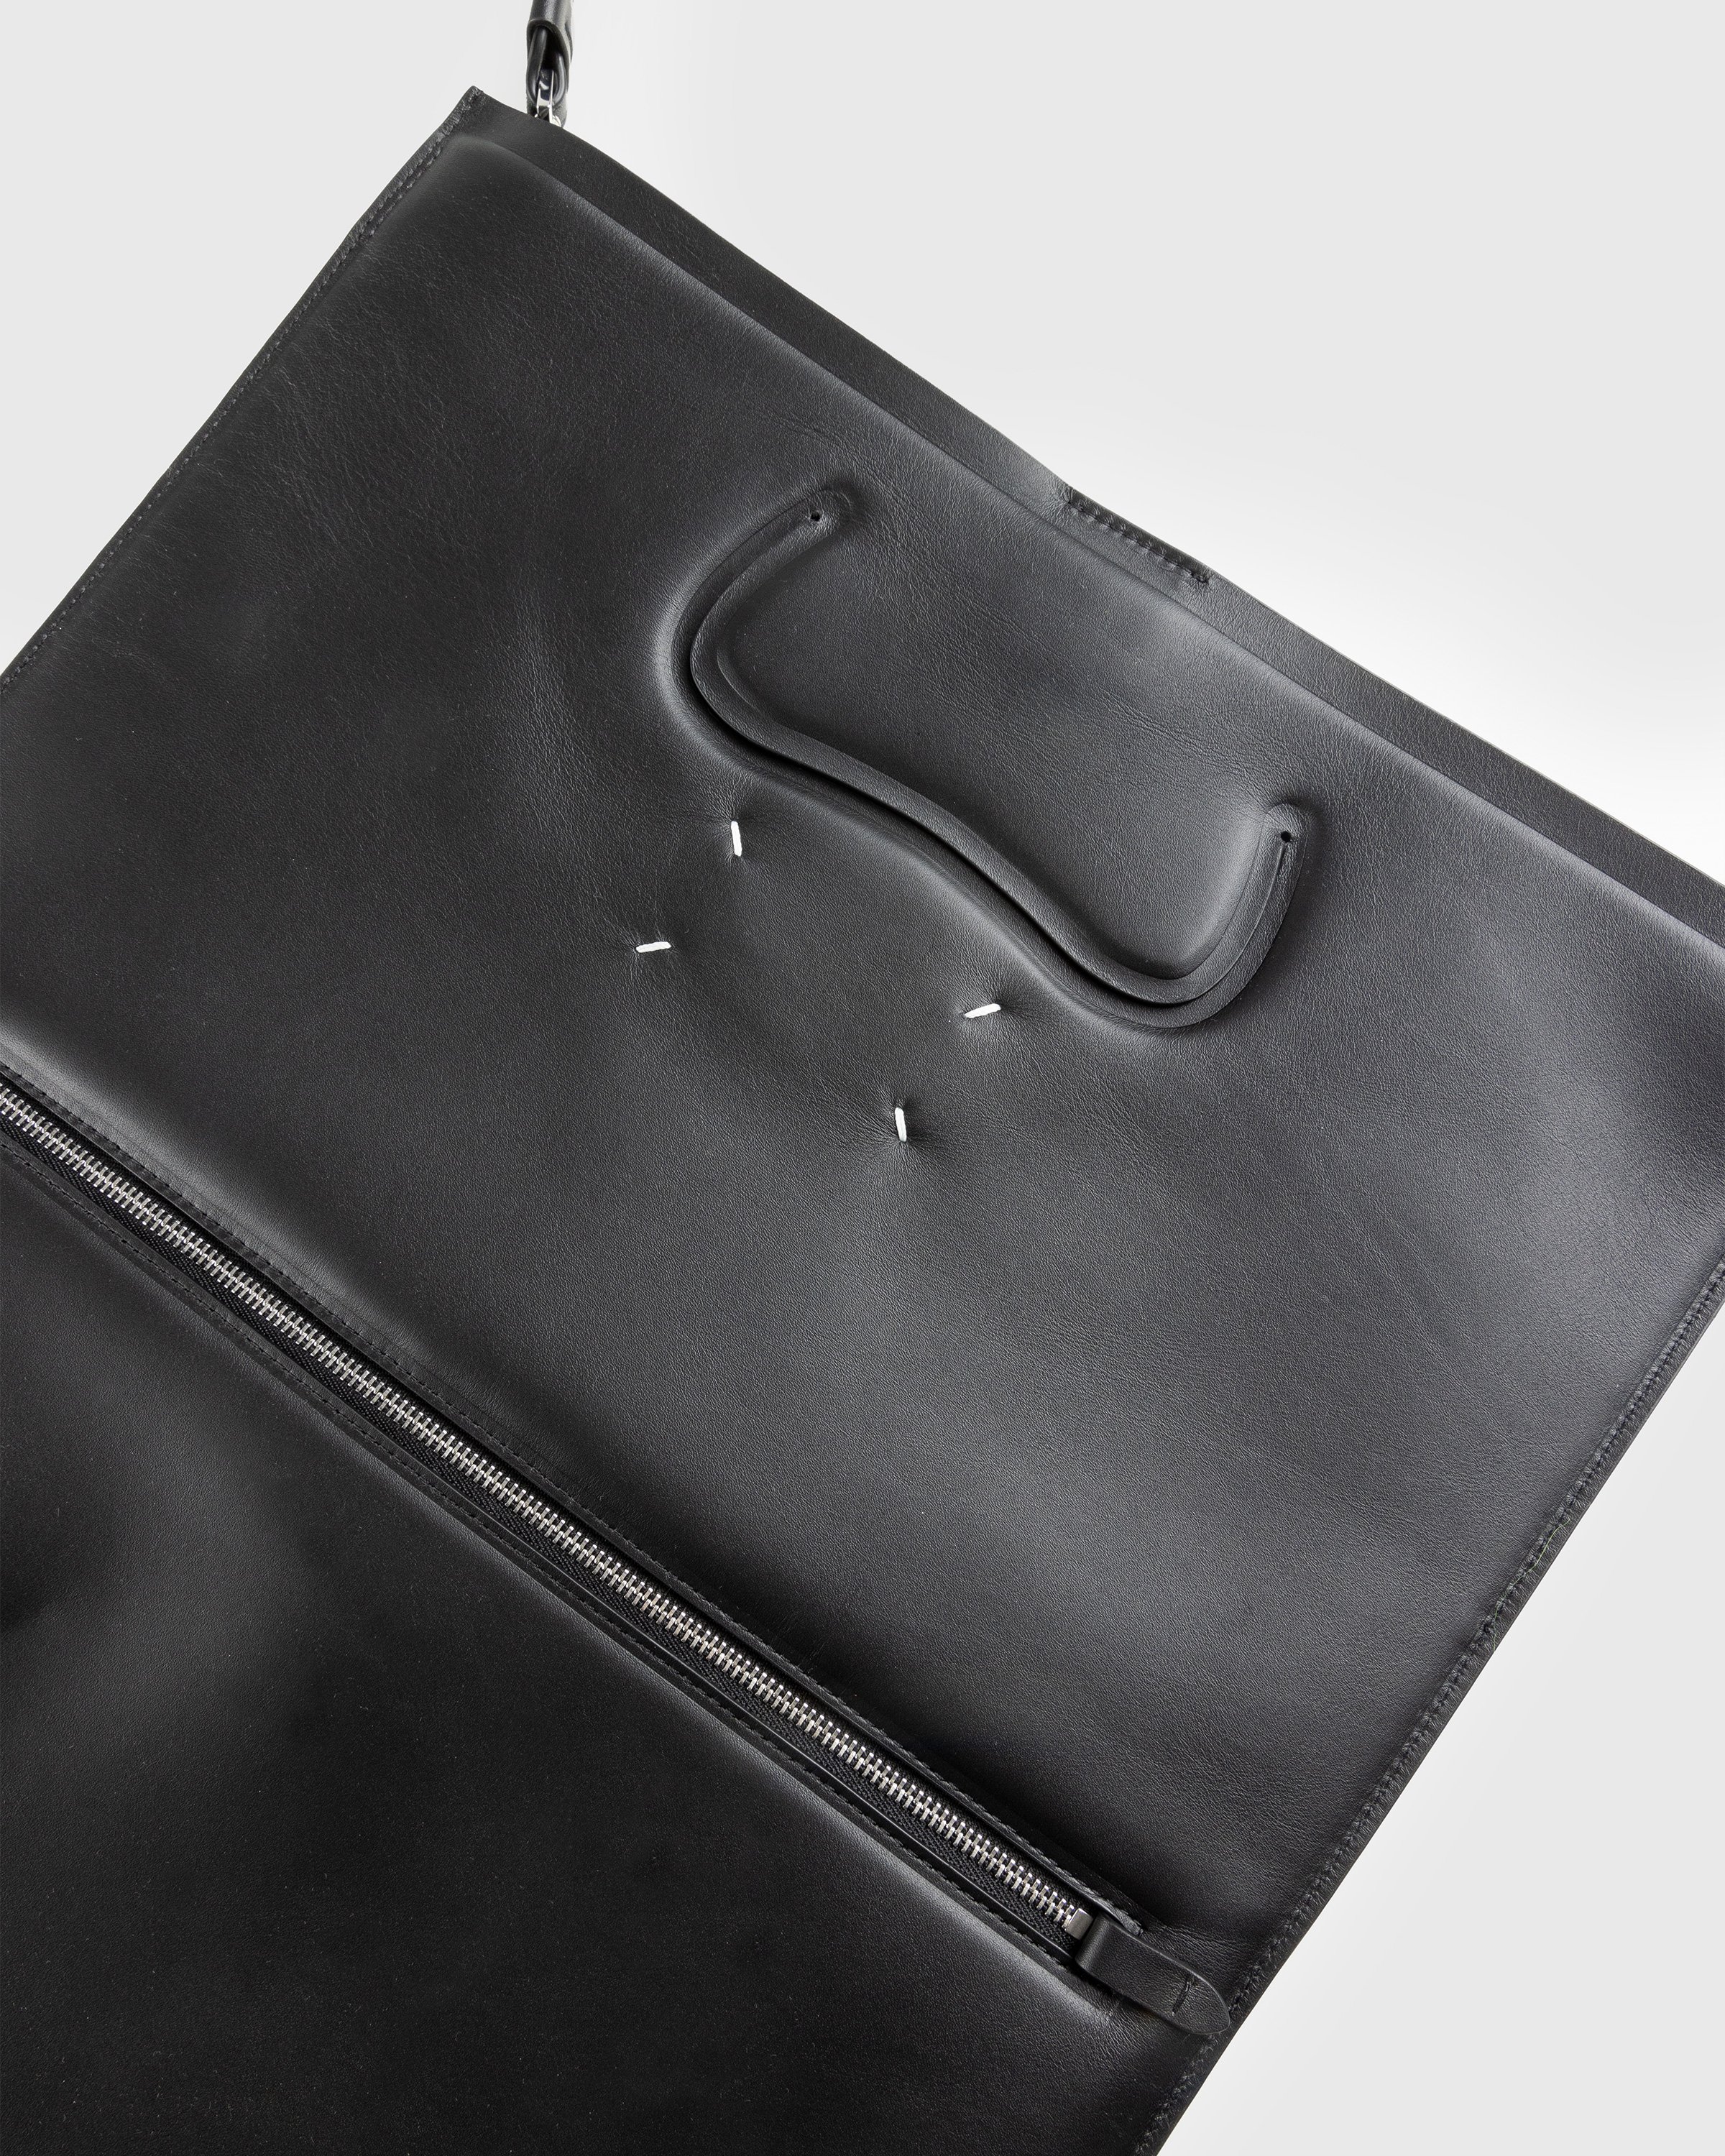 Maison Margiela - Tabi Soft Leather Tote Black - Accessories - Black - Image 4